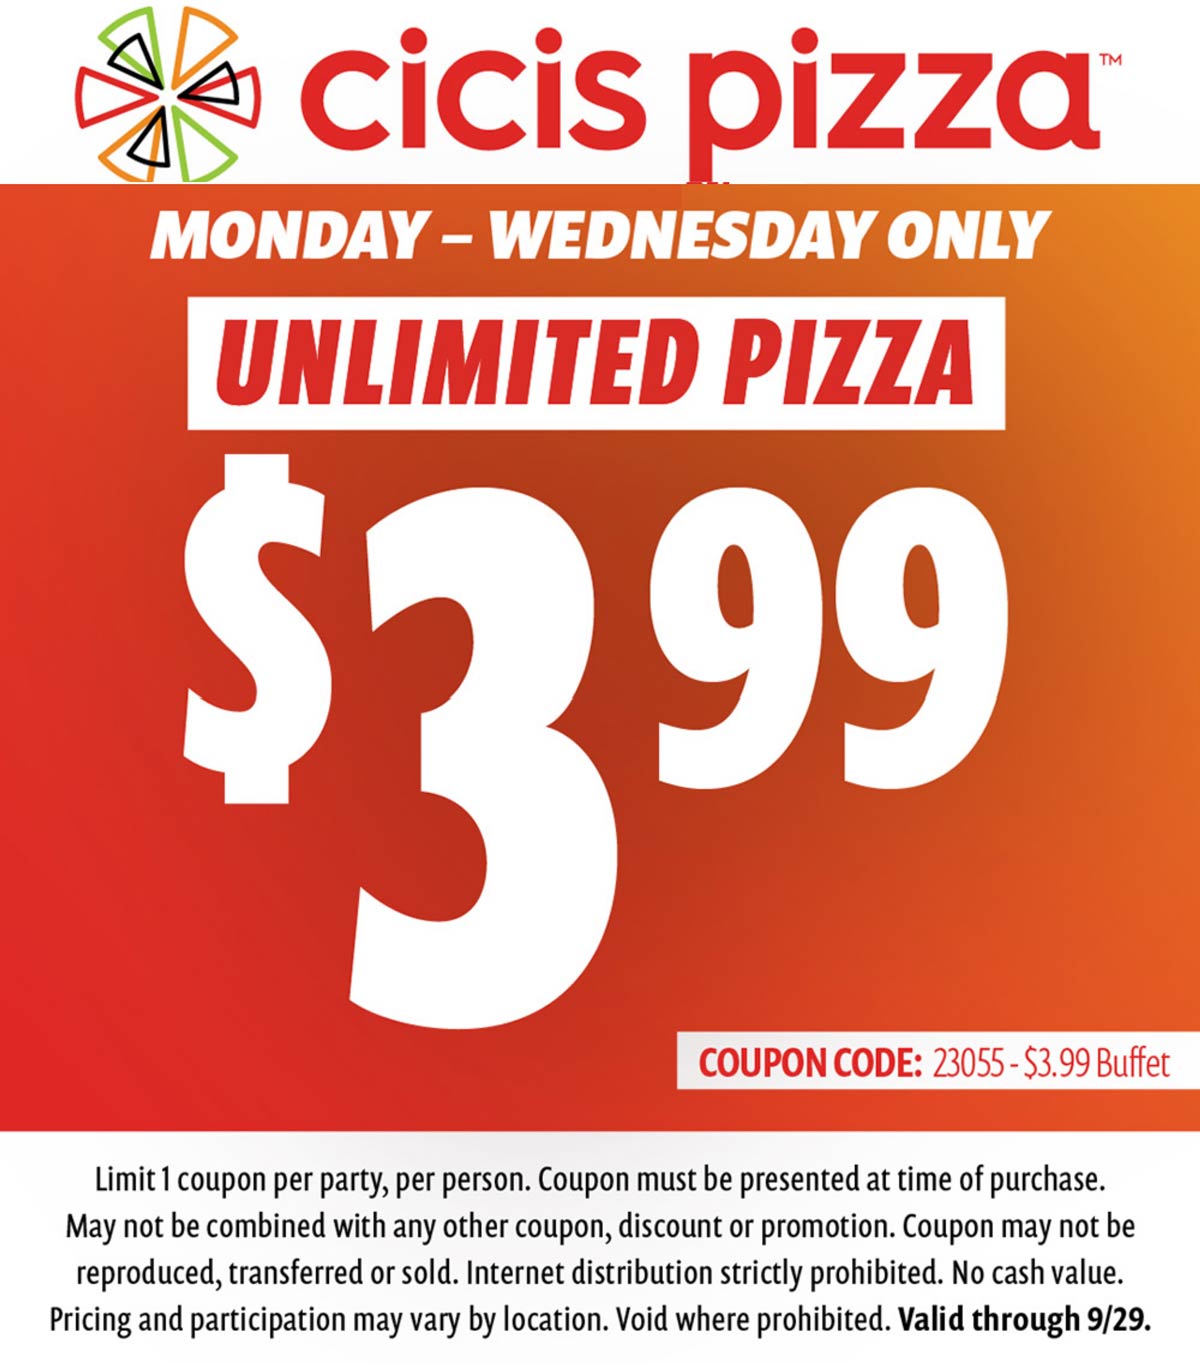 Cicis Pizza restaurants Coupon  $4 unlimited pizza Mon-Wed at Cicis Pizza #cicispizza 